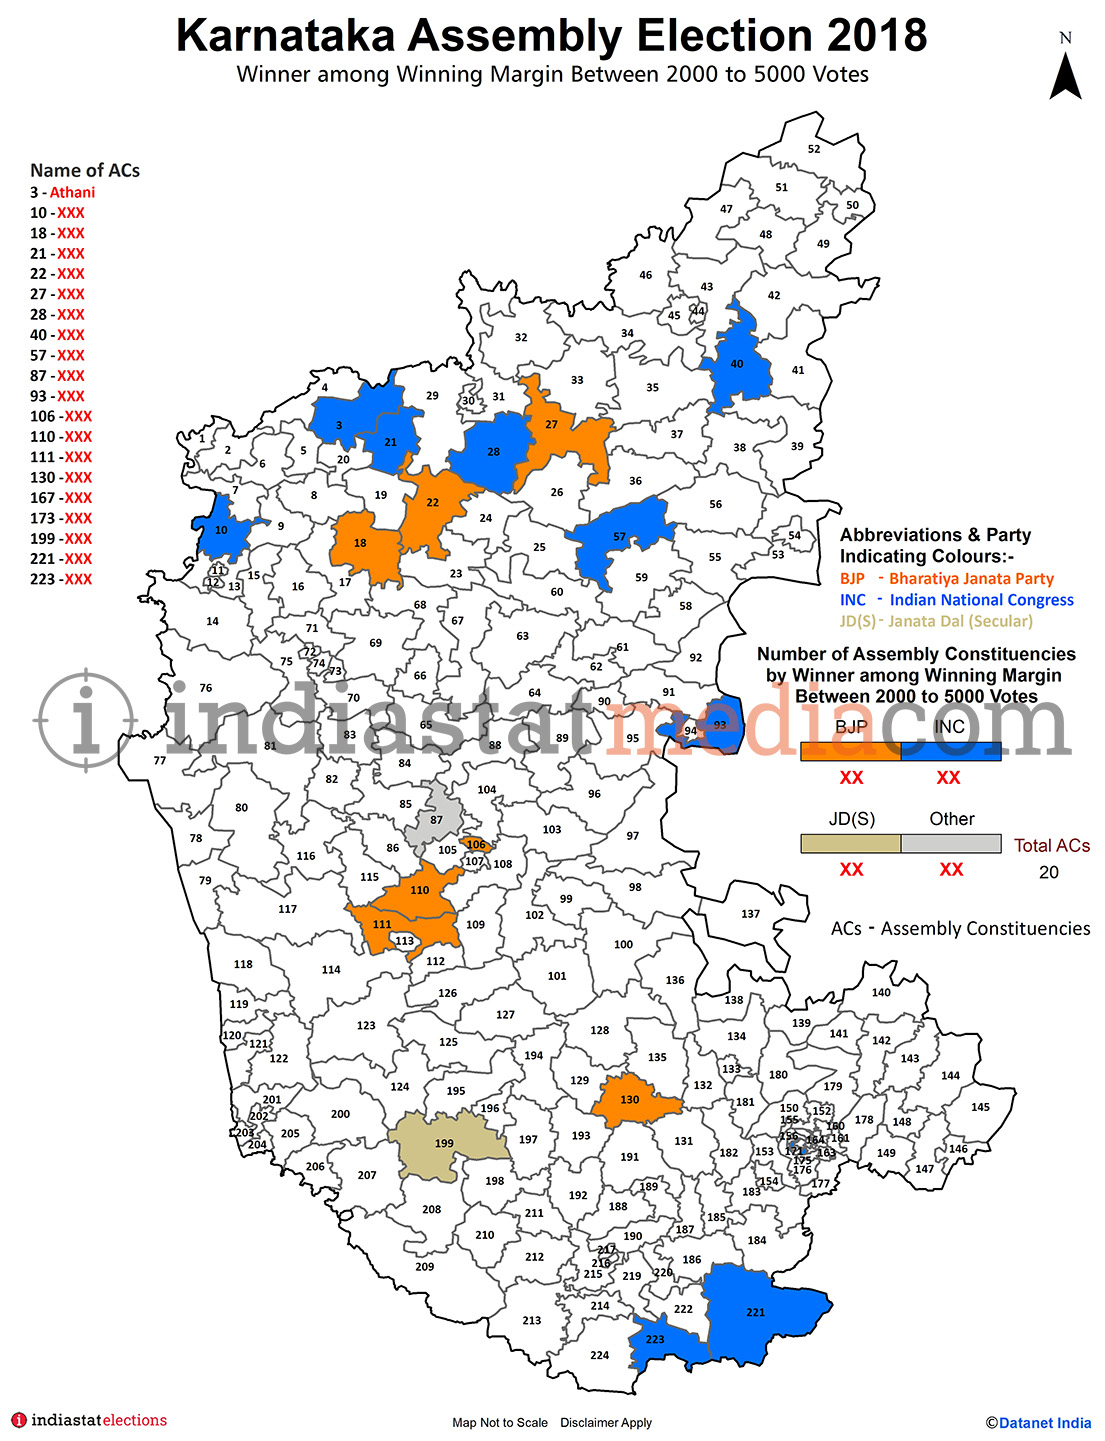 Winner among Winning Margin Between 2000 to 5000 Votes in Karnataka (Assembly Election - 2018)